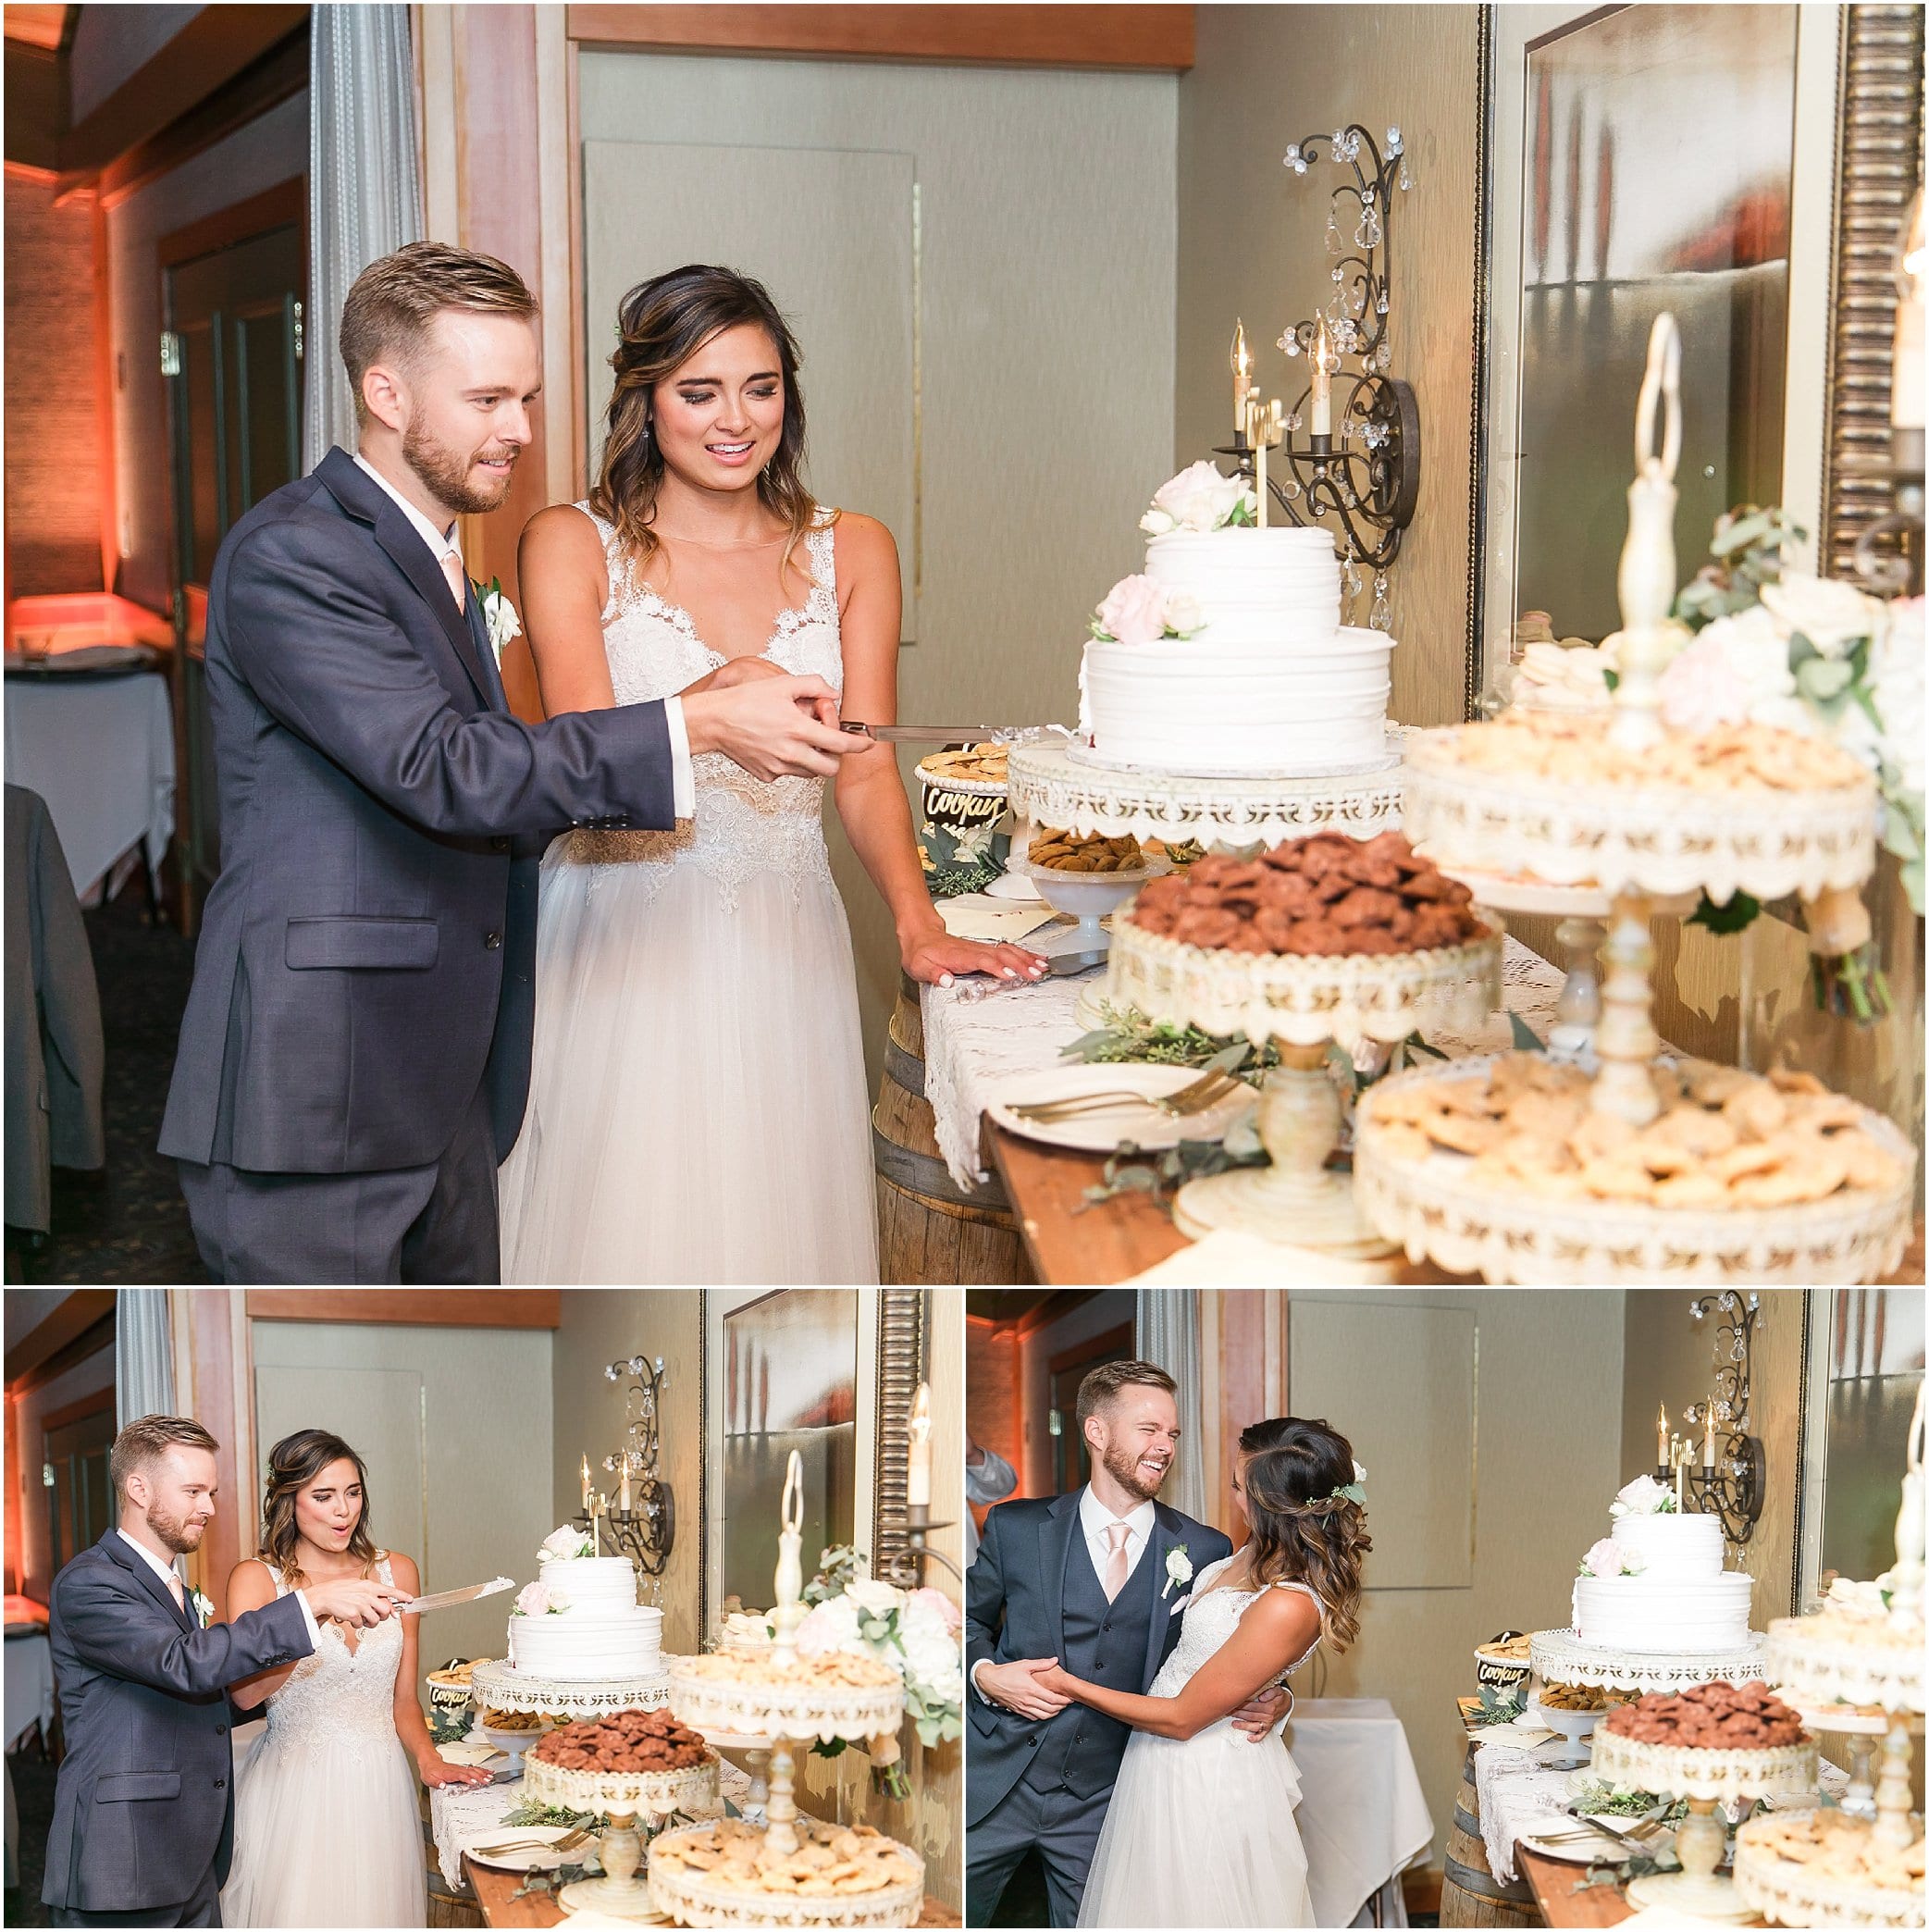 wedding day cake cutting